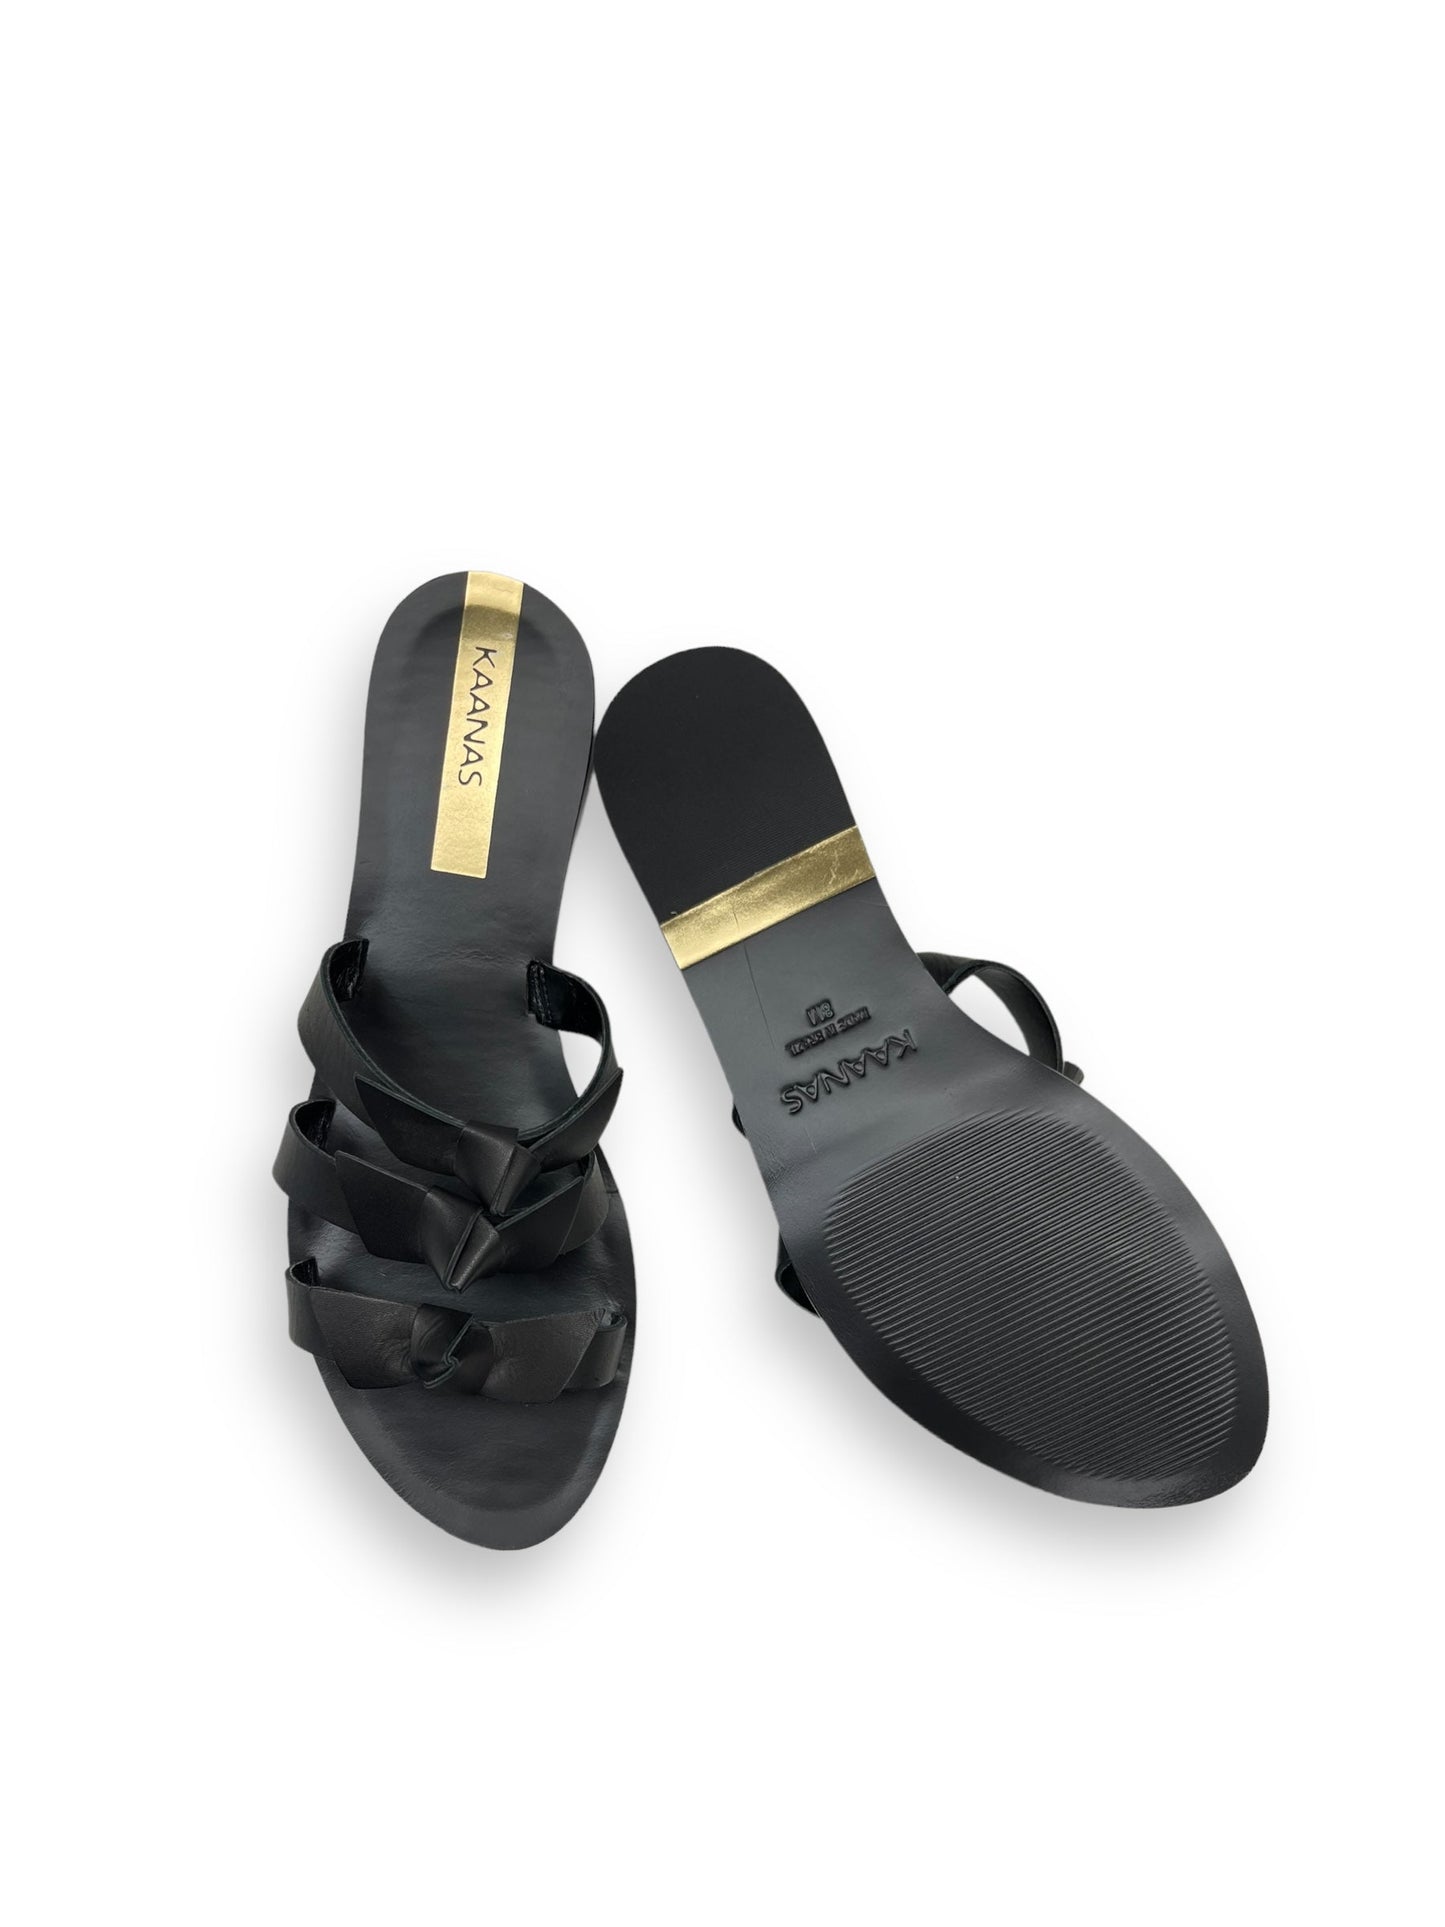 Sandals Flip Flops By Kaanas  Size: 8